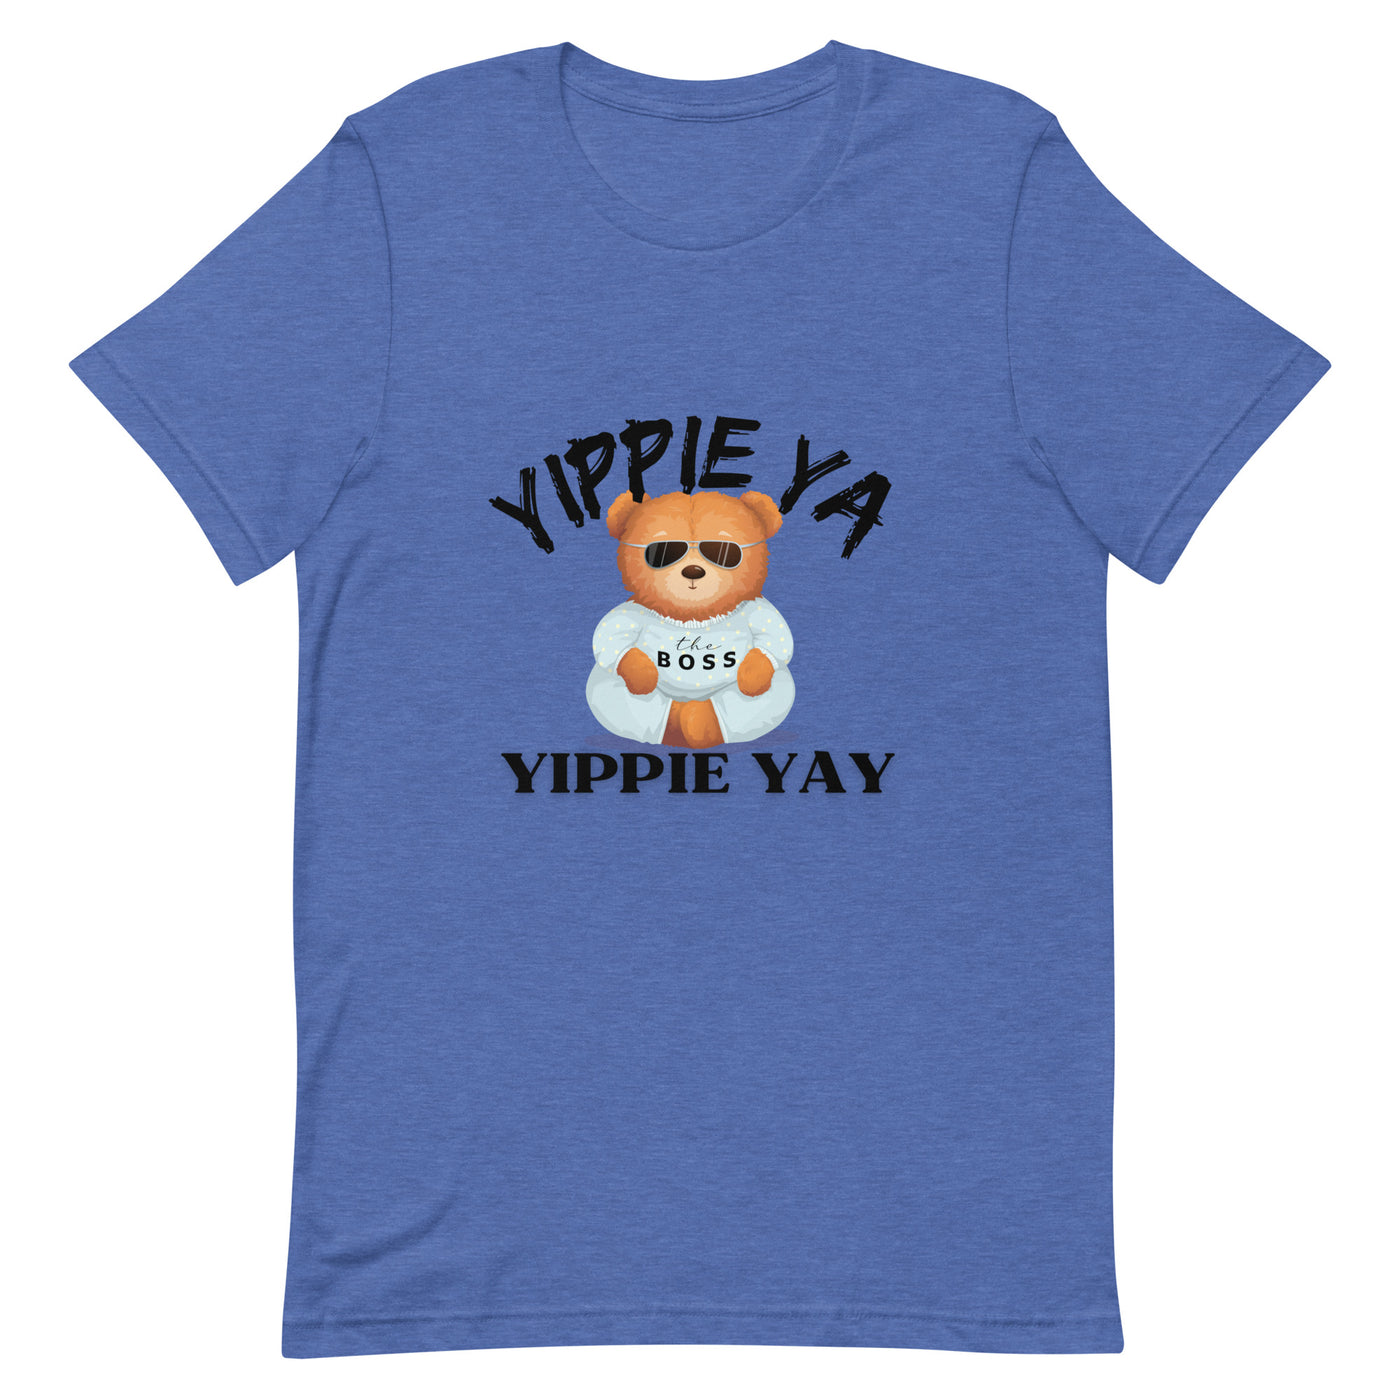 YIPPIE YA YIPPIE YAY Unisex t-shirt